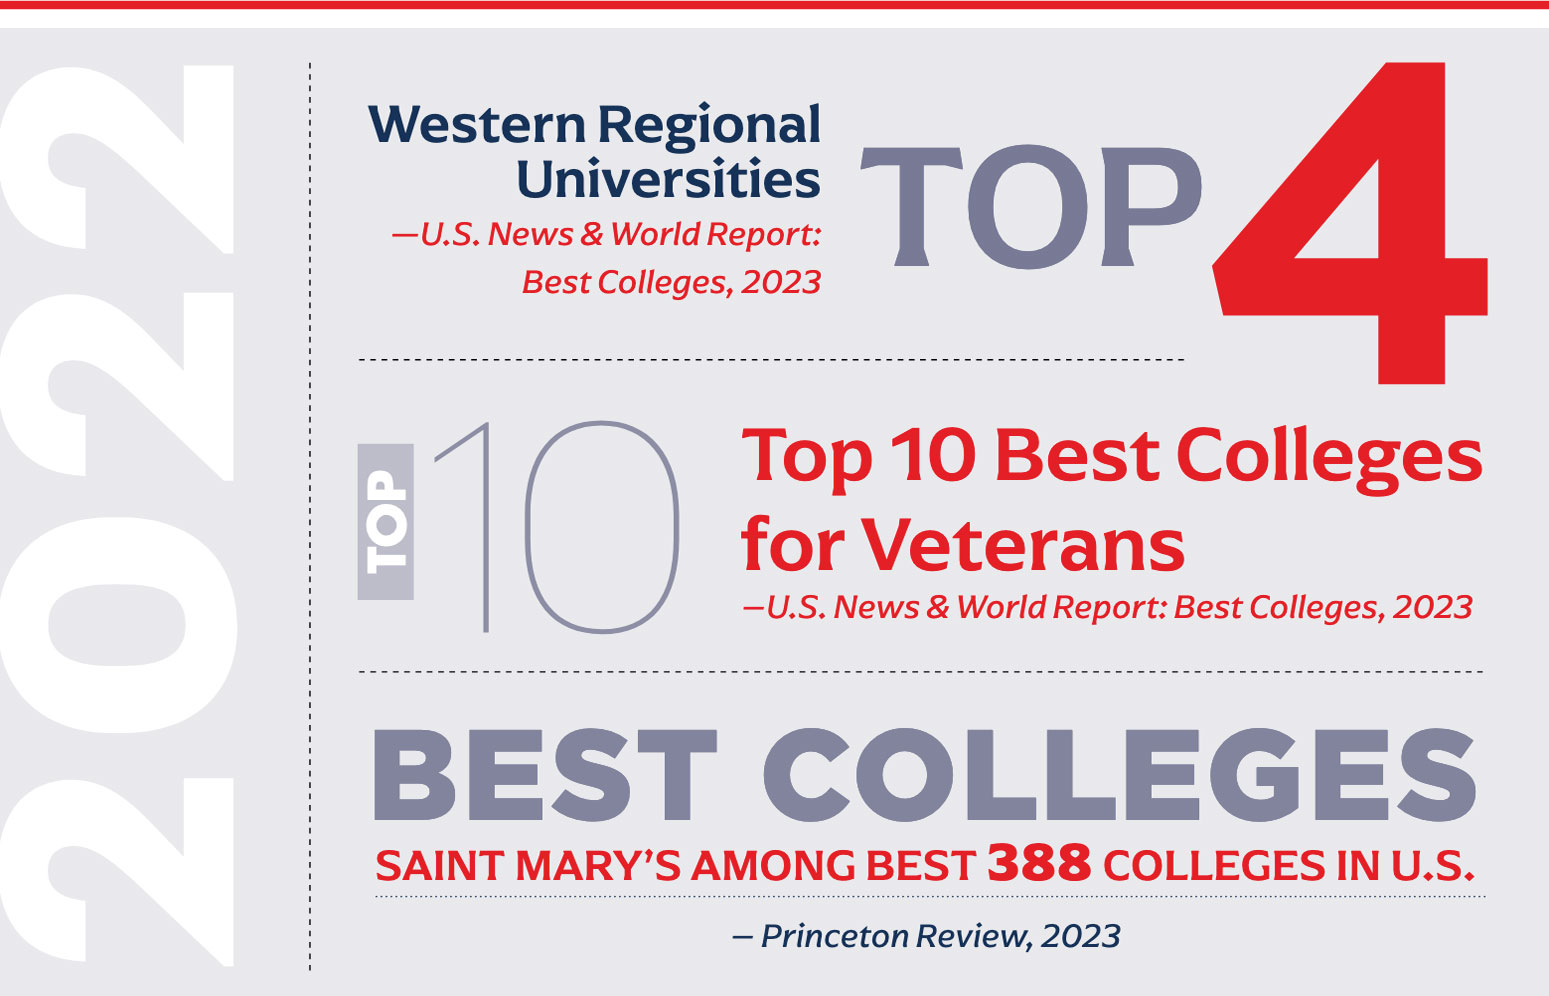 2022 TOP 4 Western Regional Universities — U.S. News &amp; World Report: Best Colleges, 2023. TOP 10 Top 10 Best Colleges for Veterans – U.S. News &amp; World Report: Best Colleges, 2023. BEST COLLEGES SAINT MARY’S AMONG BEST 388 COLLEGES IN U.S. – Princeton Review, 2023.